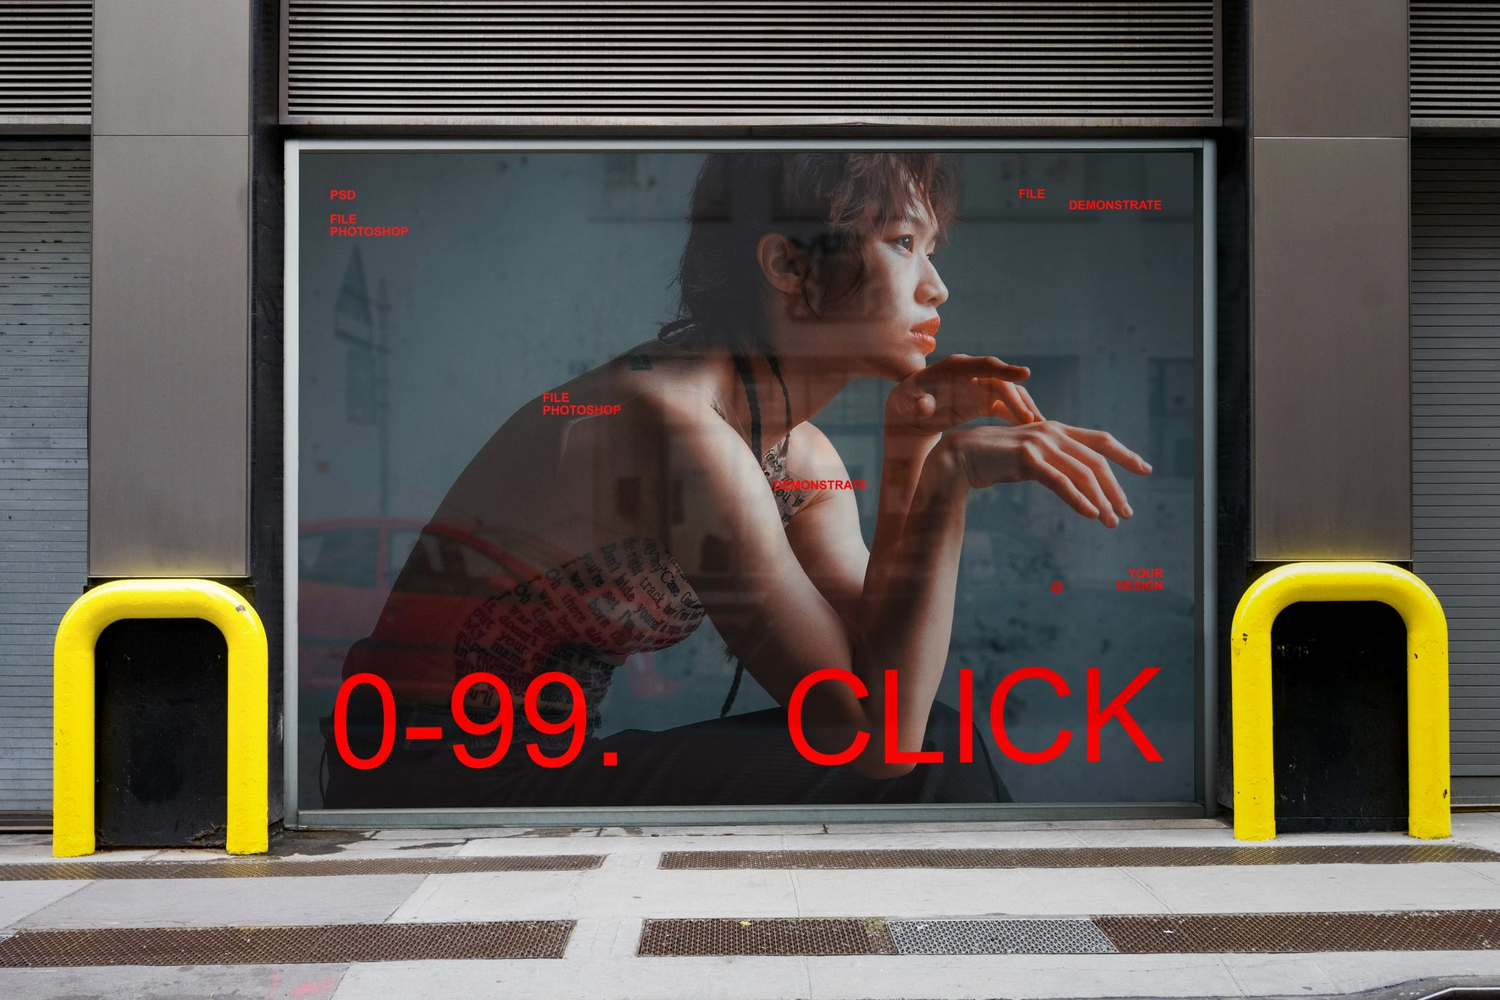 4996 户外街道商铺玻璃橱窗海报广告设计PS样机 Big Window Banner Mockup@GOOODME.COM